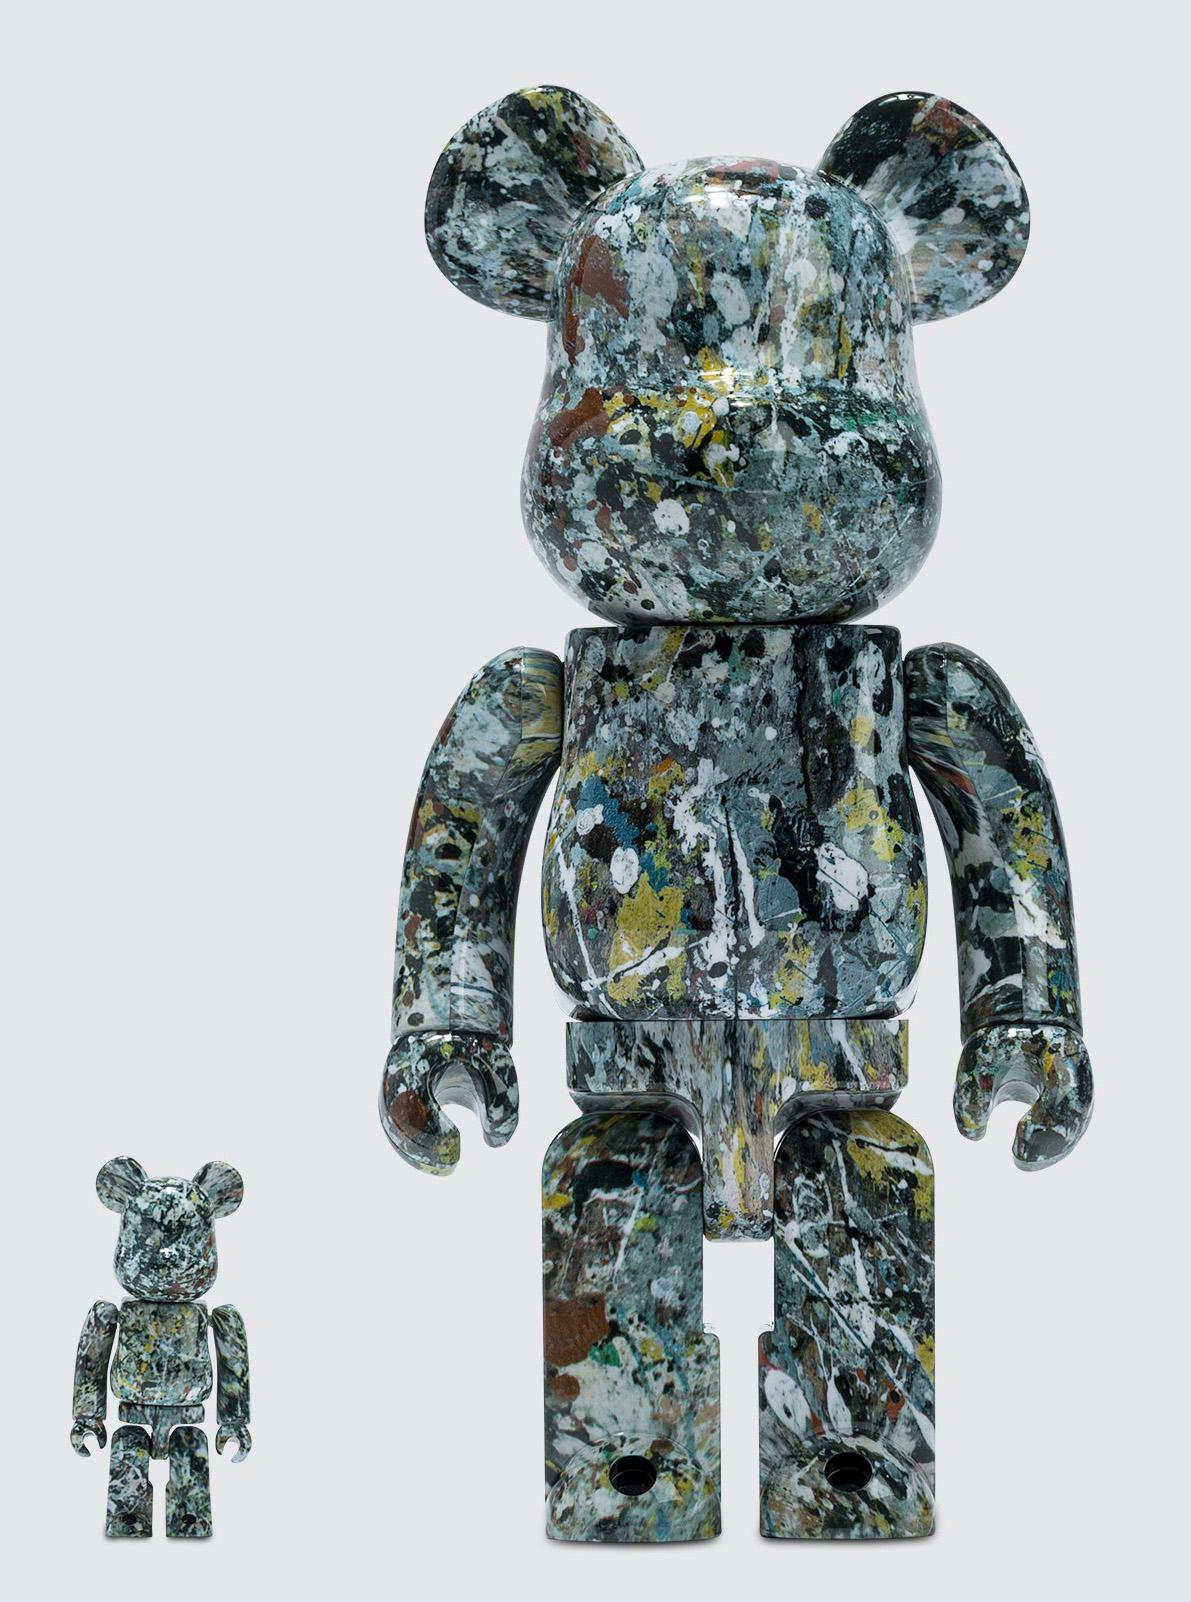 Jackson Pollock Bearbrick 400% Companion (Jackson Pollock BE@RBRICK) - Sculpture by (after) Jackson Pollock 